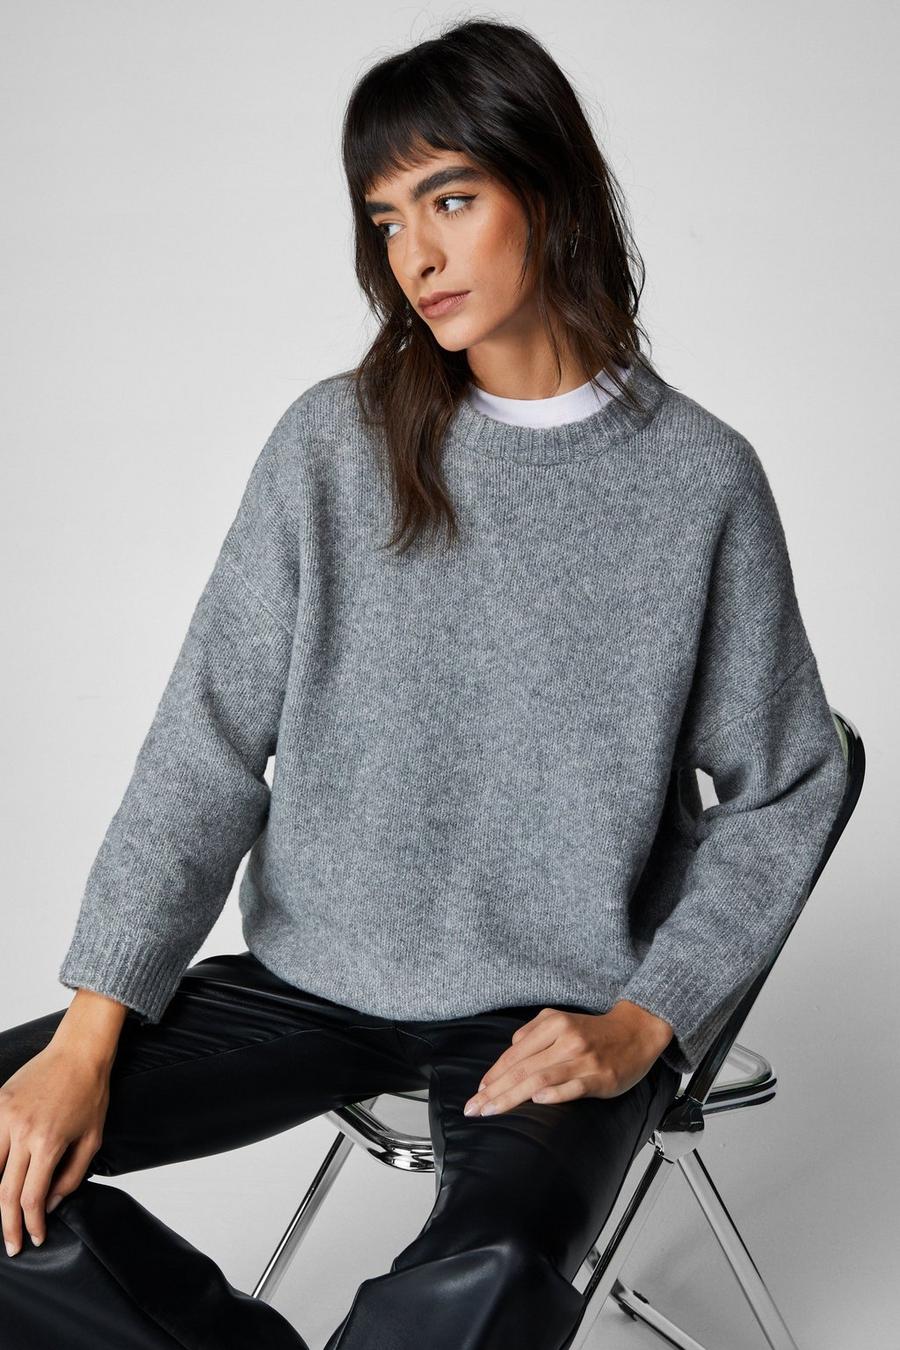 Women's Sweaters, Knit Jumpers & Sweater